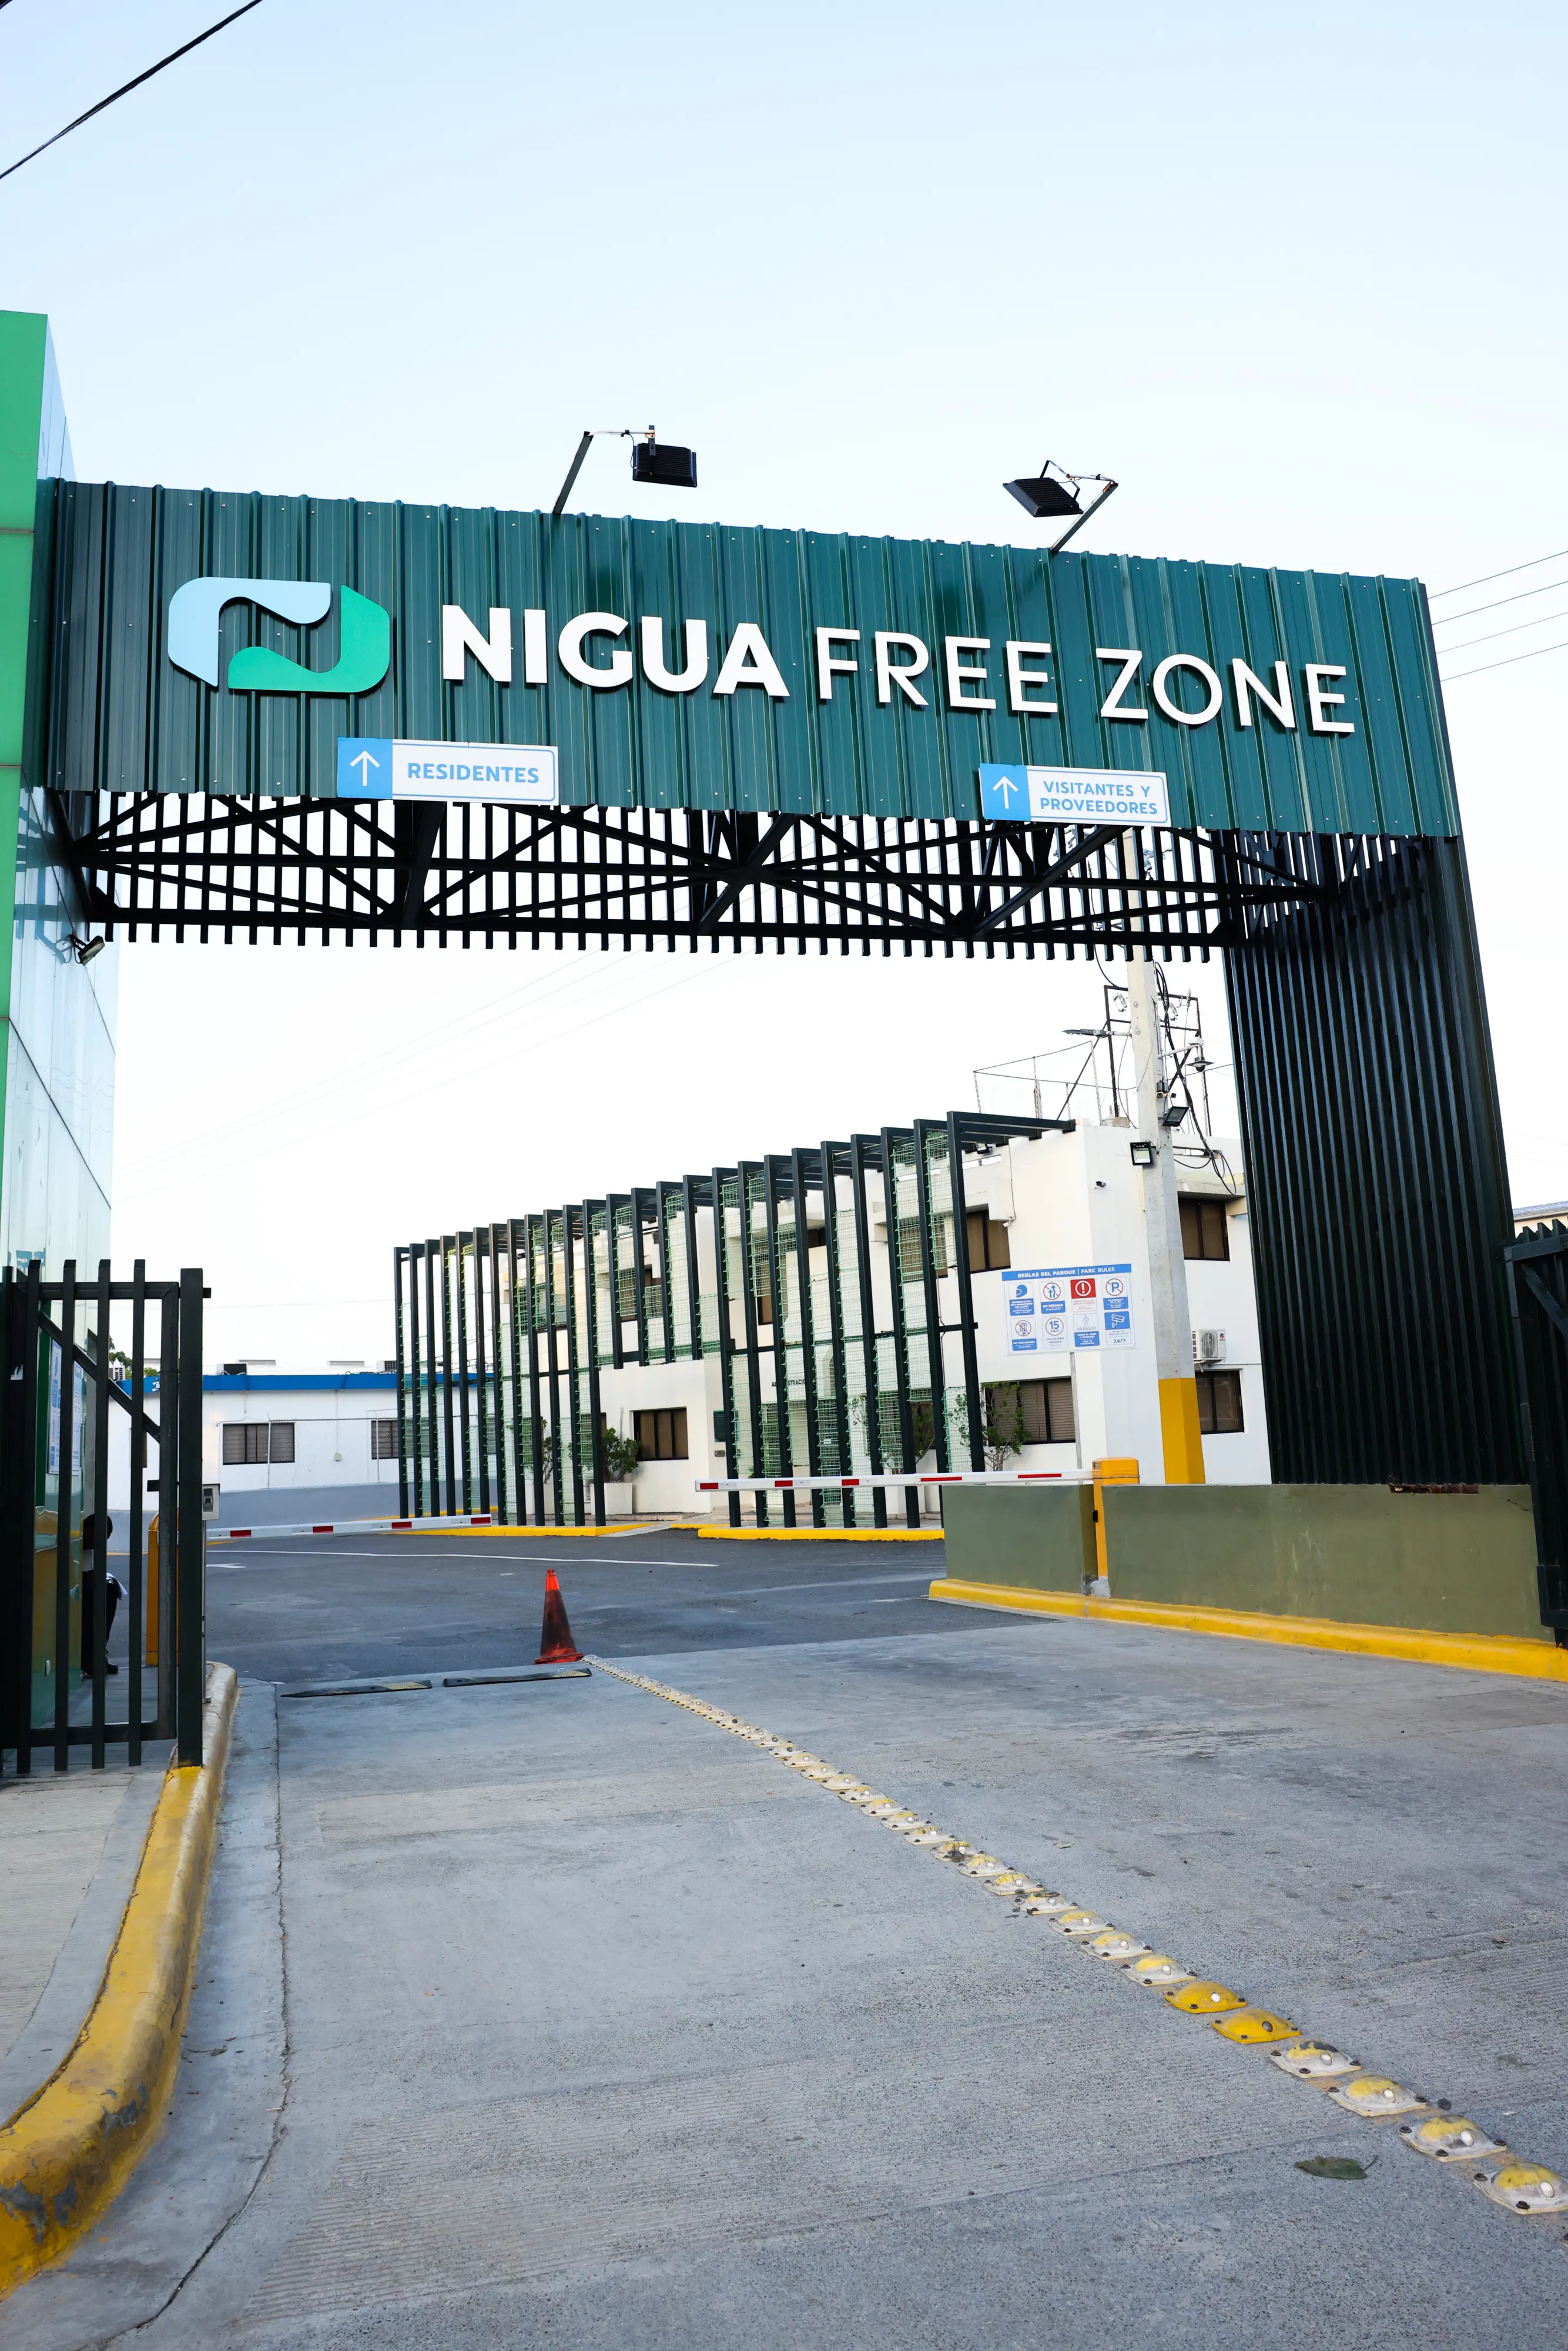 Nigua Free Zone joins the National Land Transportation Network (RNTT)